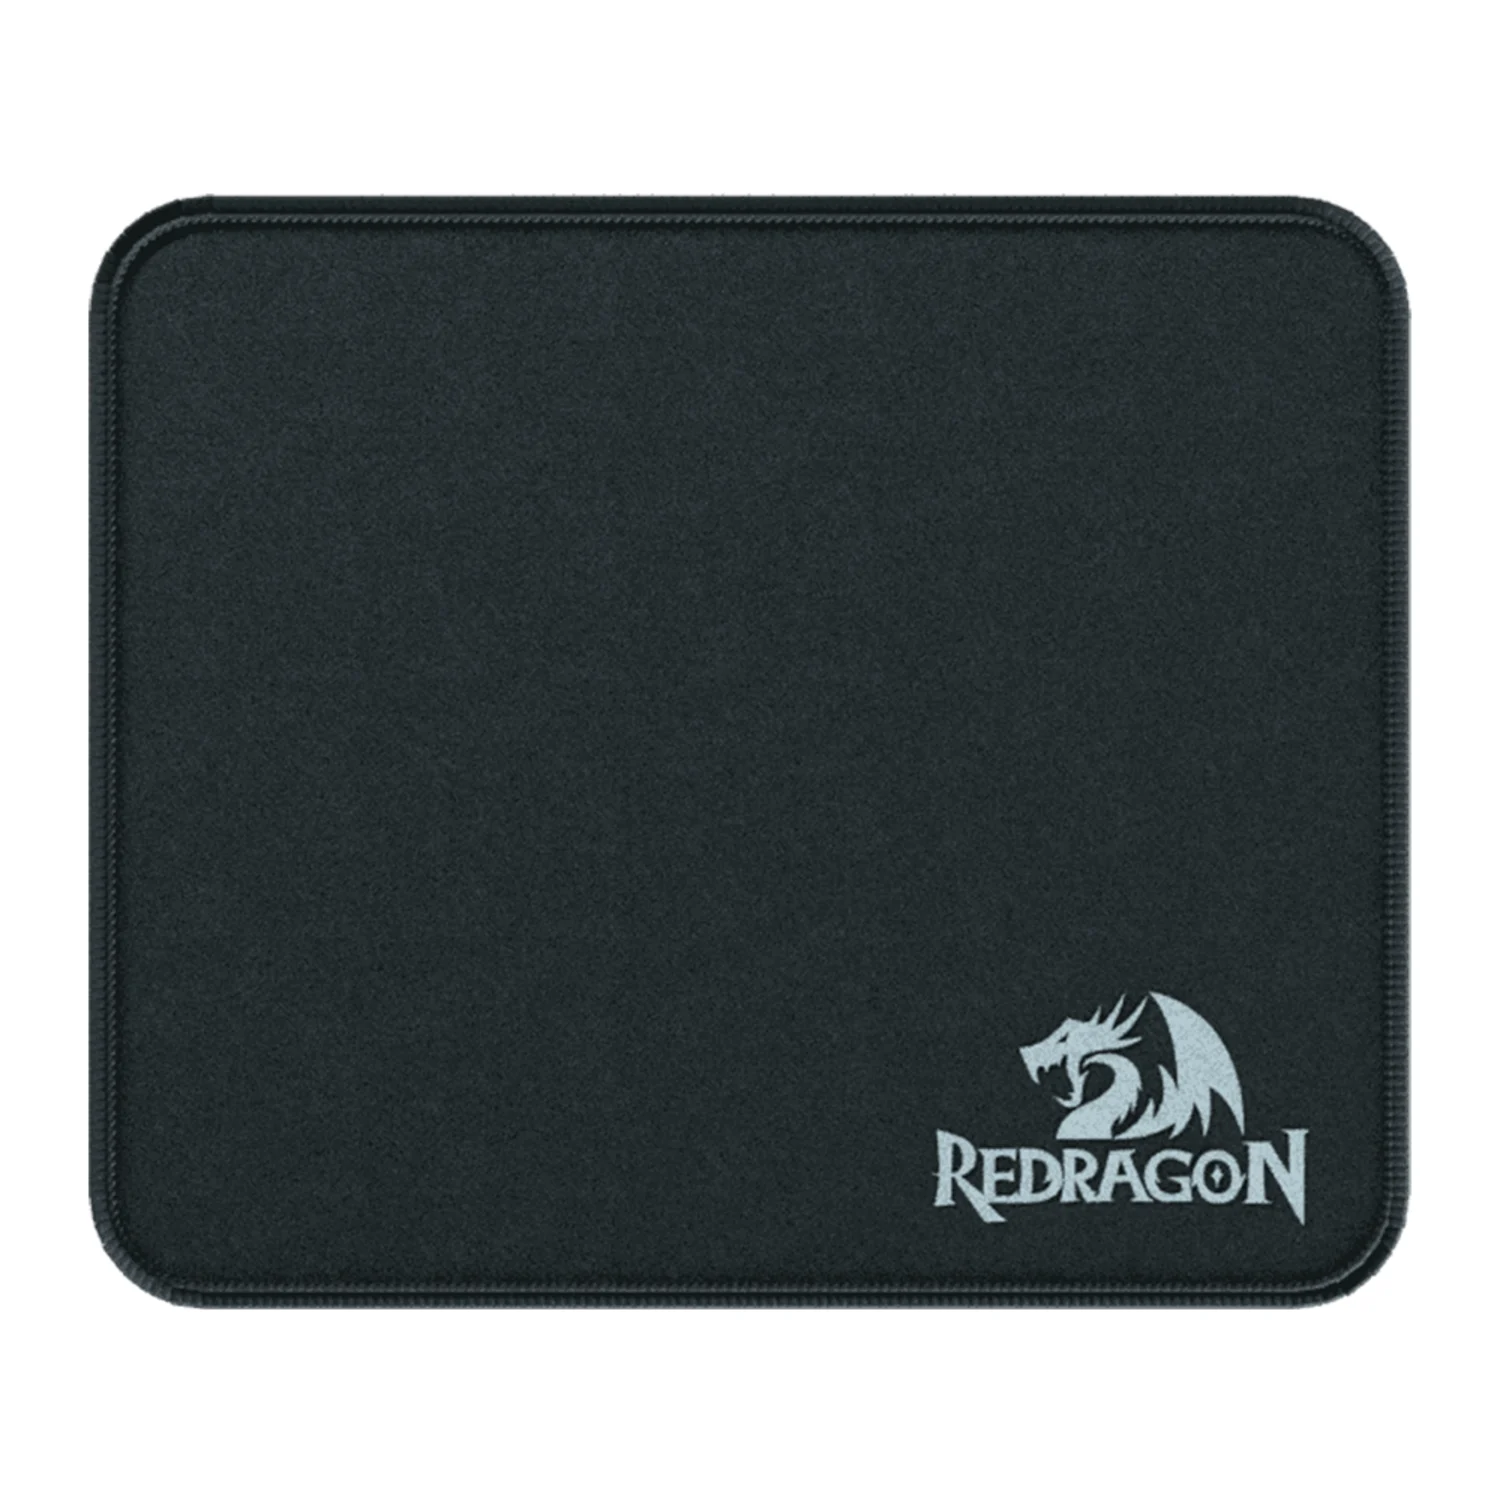 Mousepad Gamer Redragon Flick S P029 - Preto